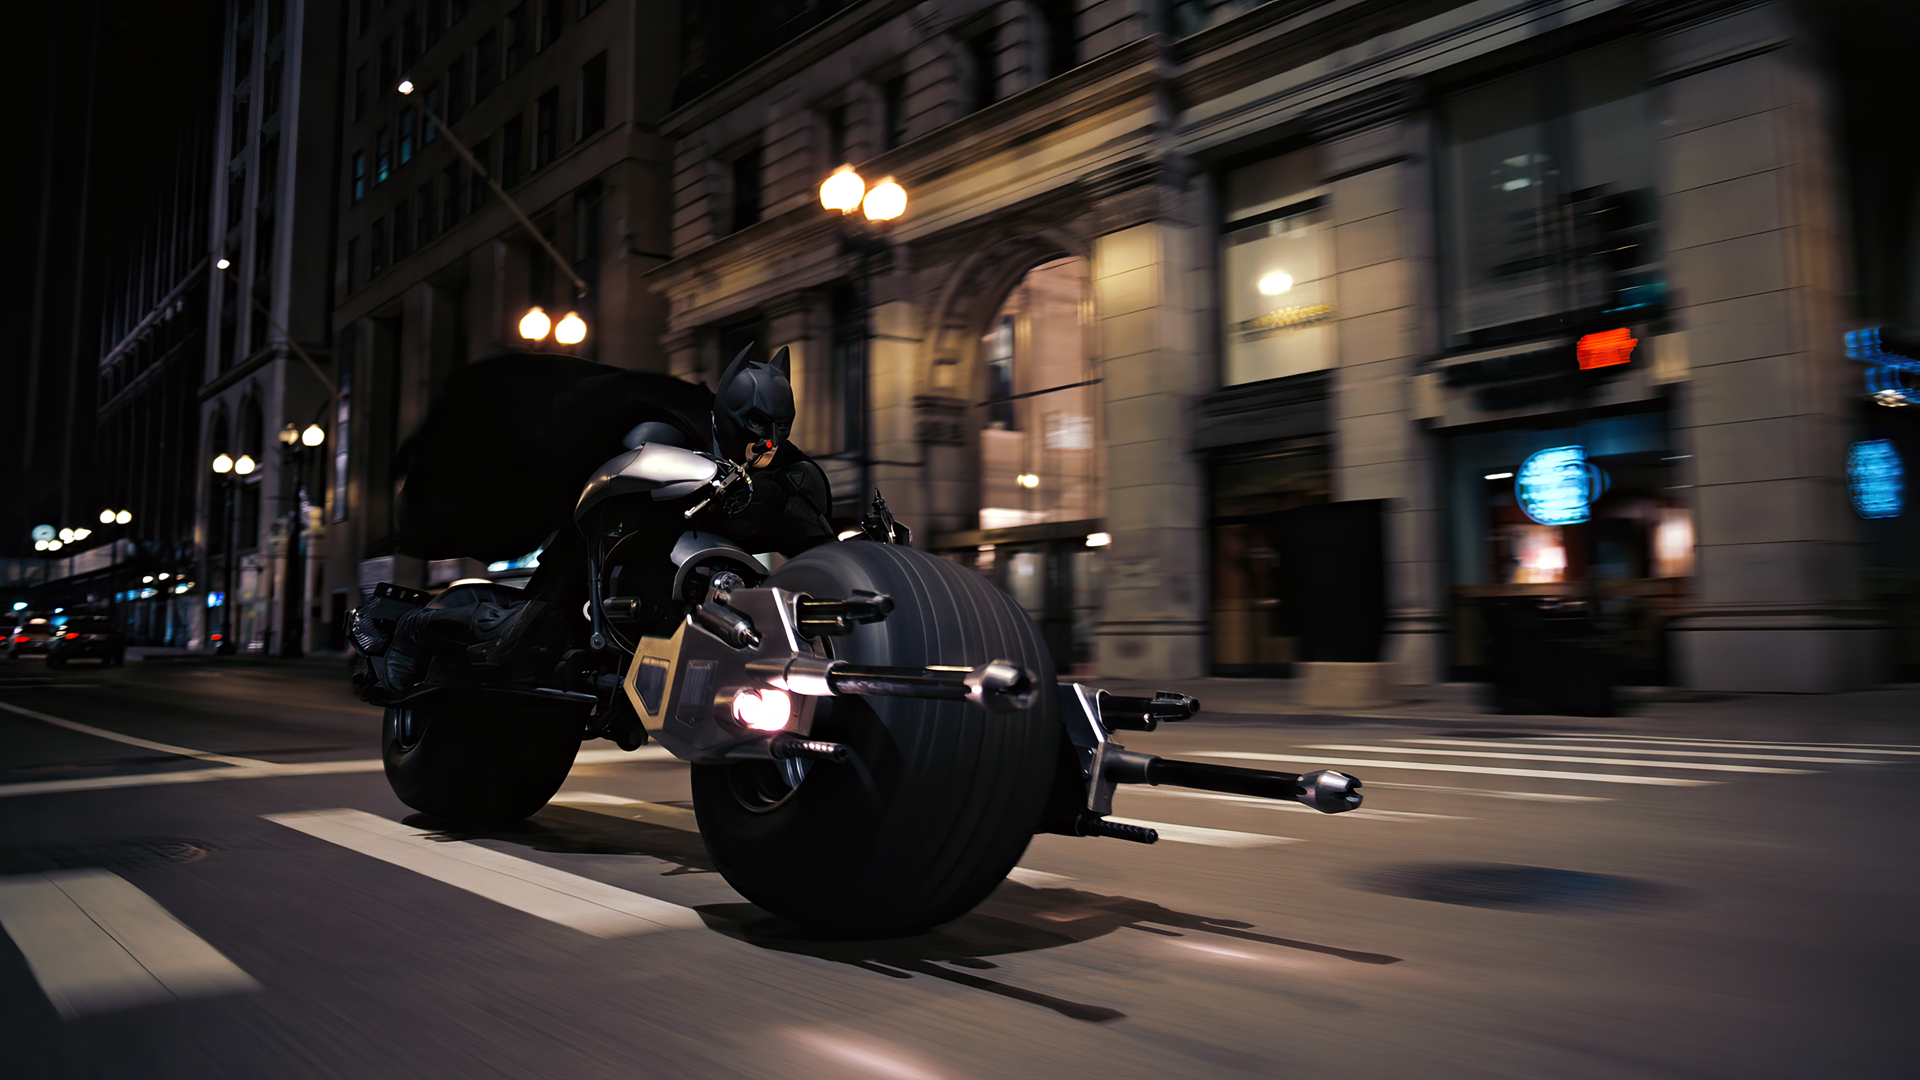 The Dark Knight Movies Film Stills Batpod Street Gotham City Batman Superhero Vehicle Building 1920x1080